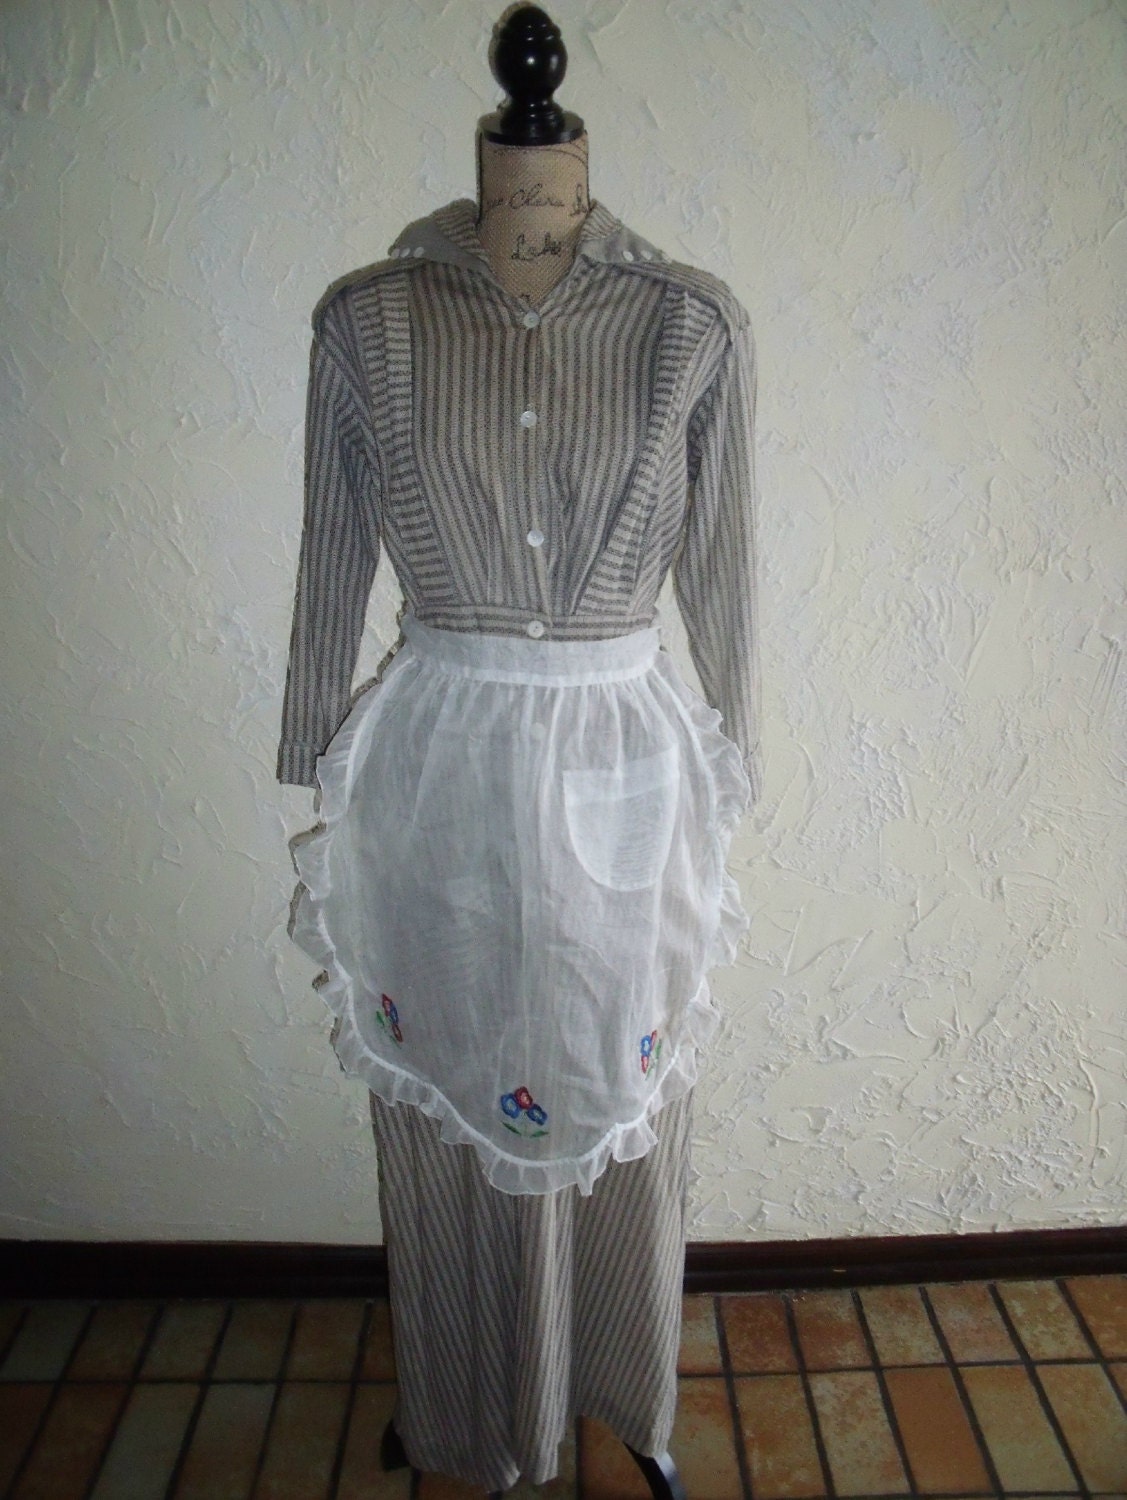 Vintage 1920s gray Female Uniform Or Dress Clothes Work Prison Attire With Apron